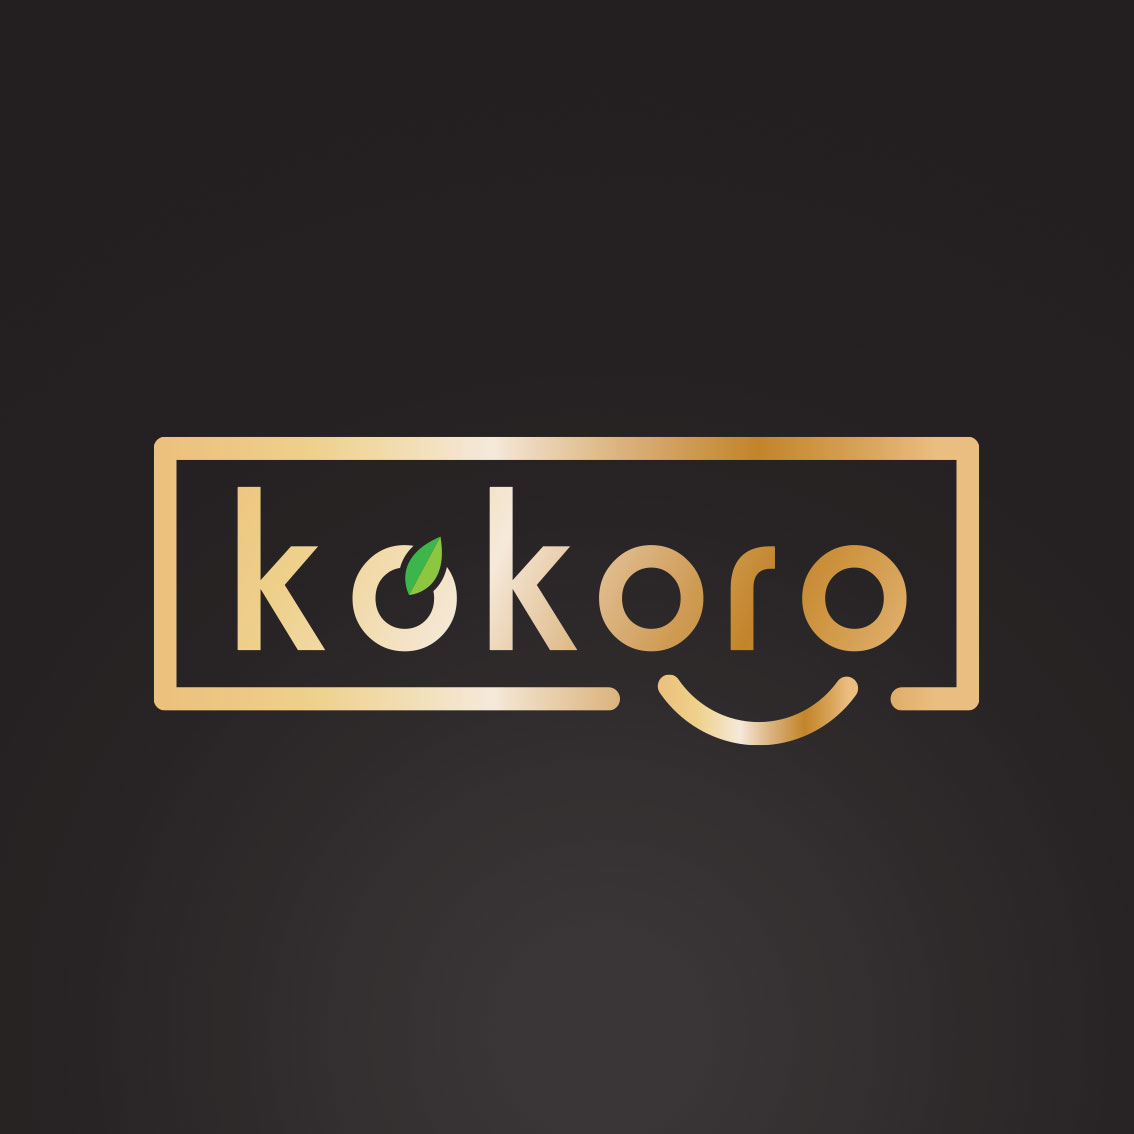 kokoro logo design